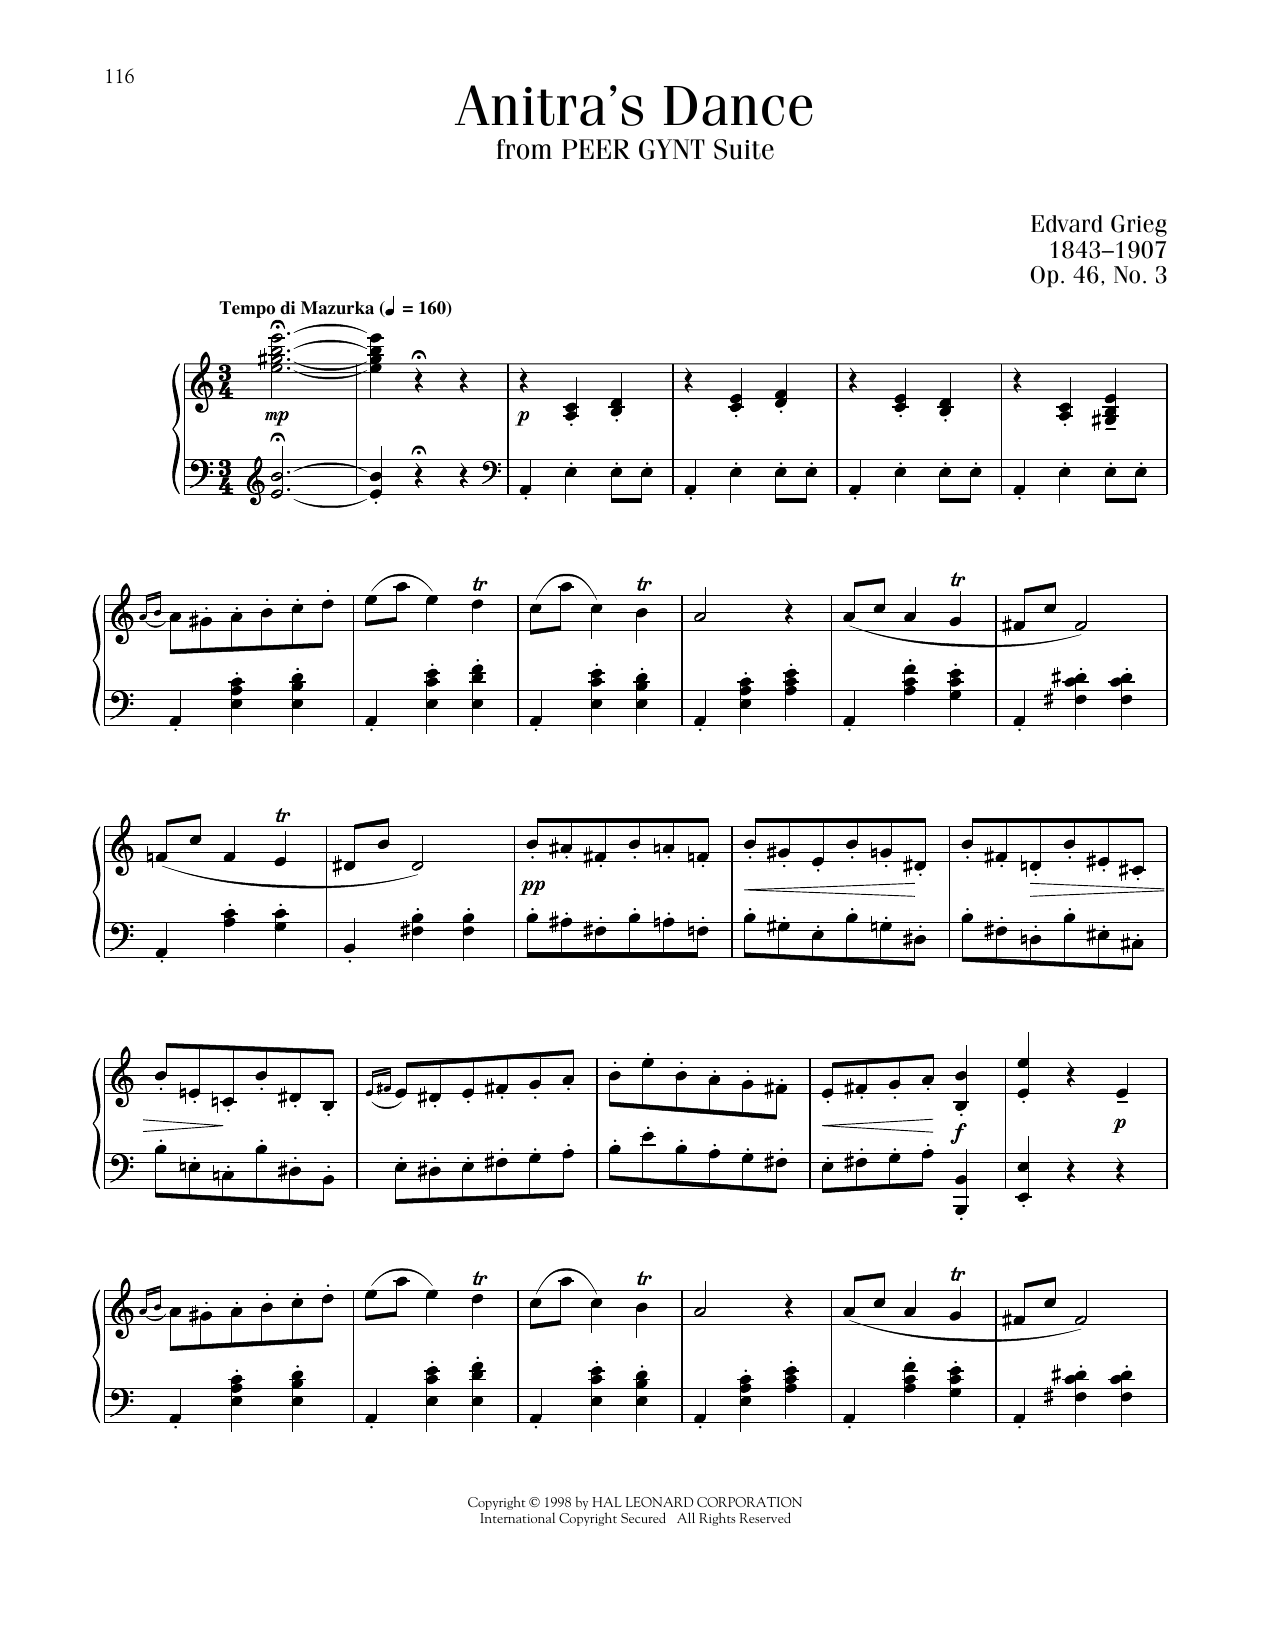 Edvard Grieg Anitra's Dance sheet music notes printable PDF score